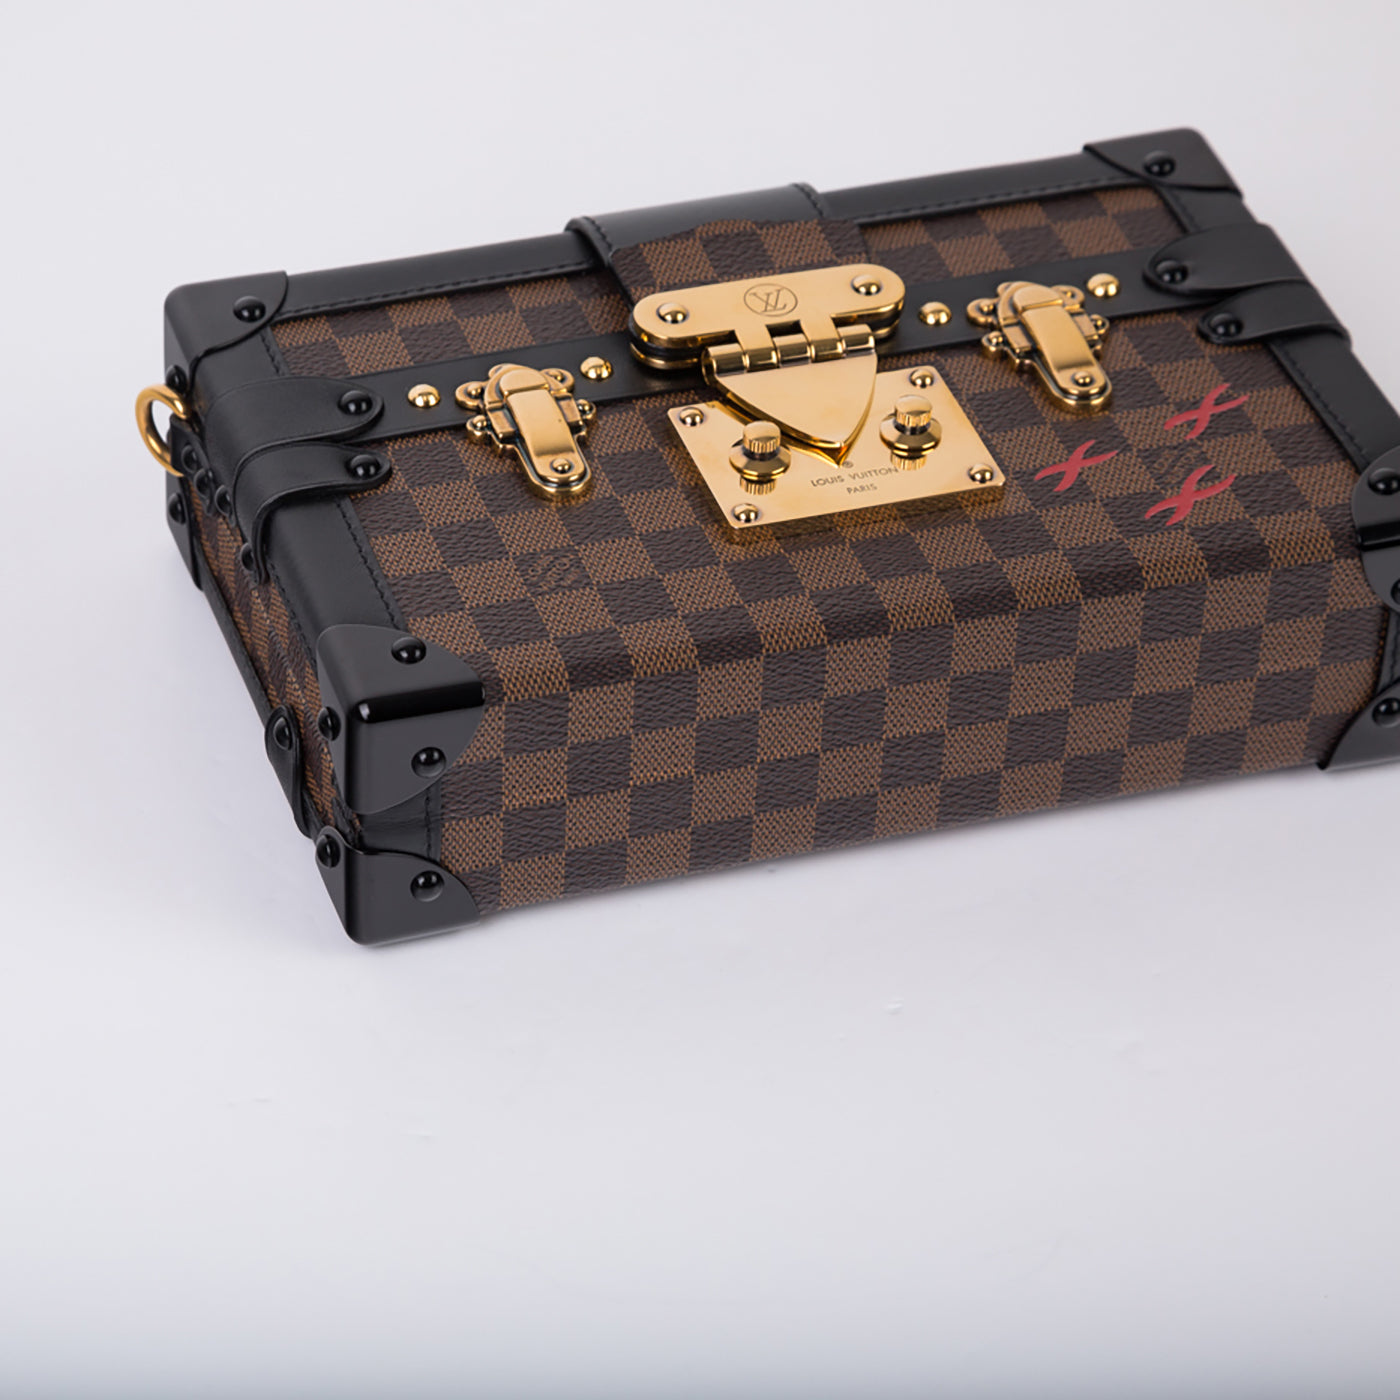 Louis Vuitton Petite Malle Bag in Damier Ebene with Golden Brass